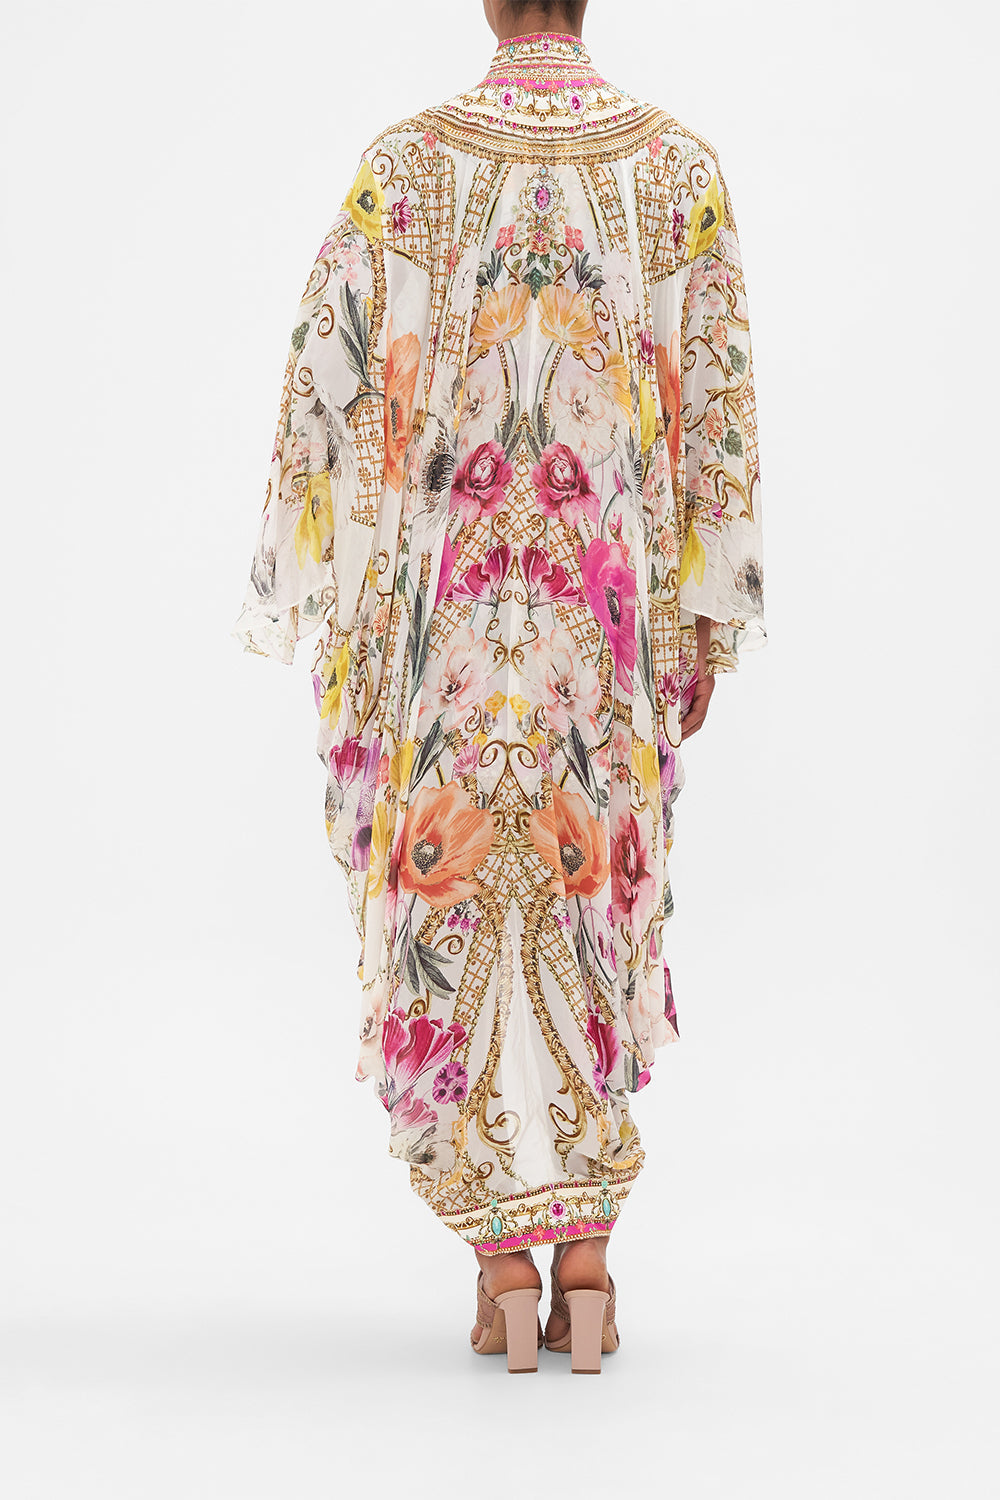 Back view of model wearing CAMILLA silk floral kimono in Destiny Calling print